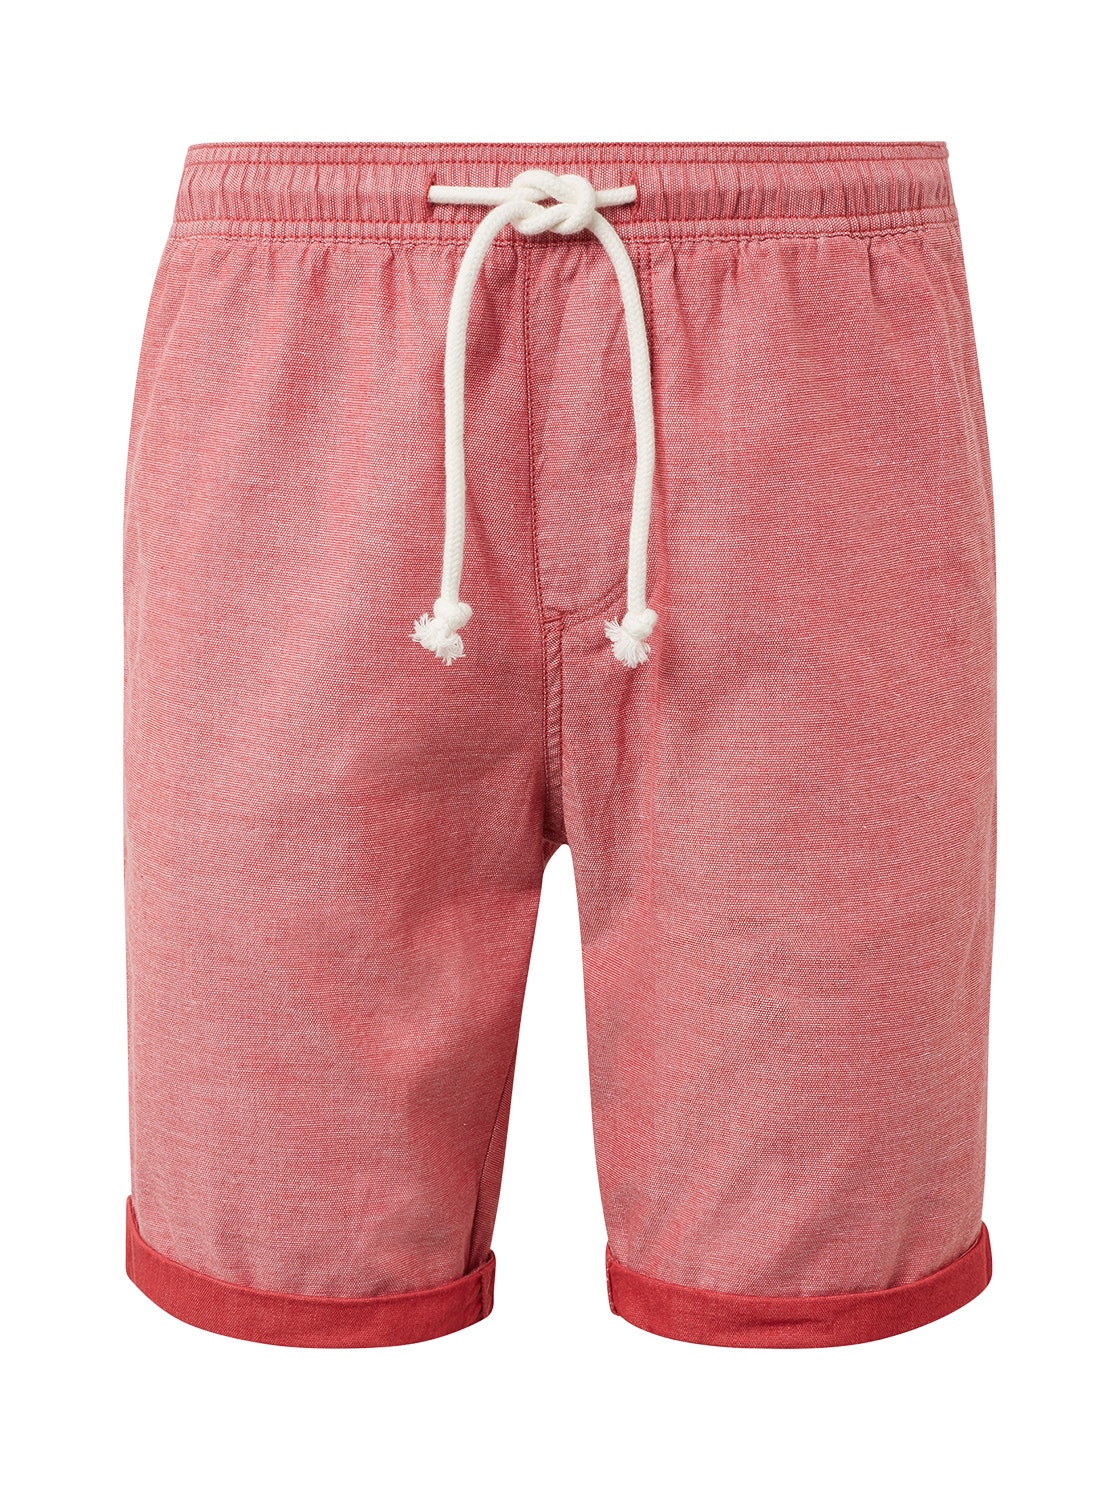 beach shorts yarn dye, red yarndye pique             Red